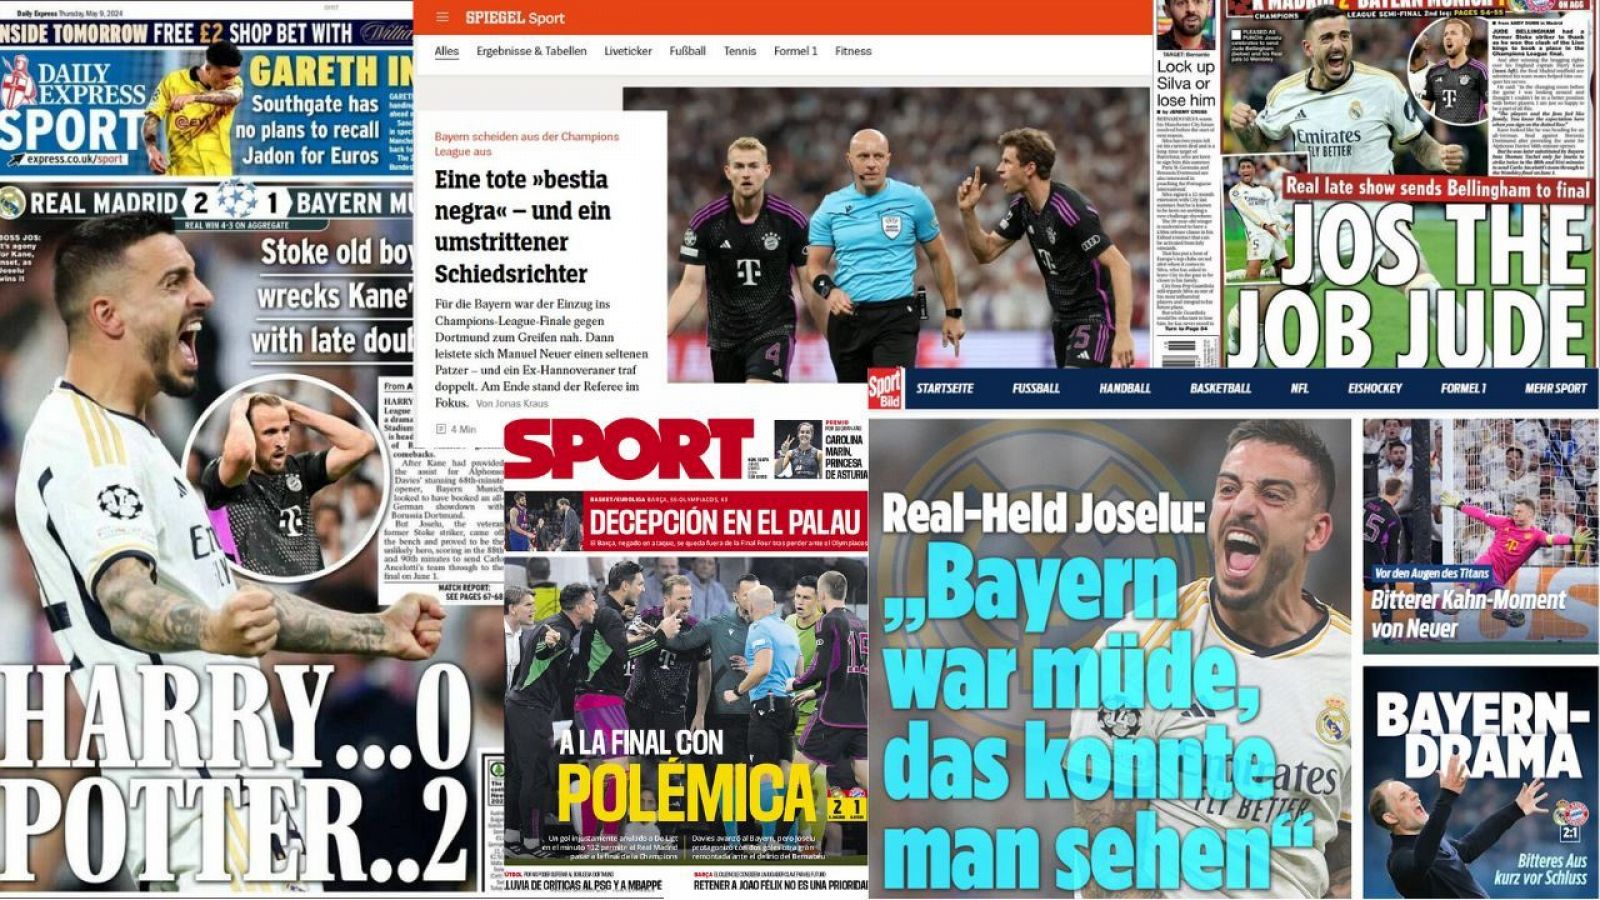 Joselu 'Potter' y la "bestia negra" del Bayern: la prensa internacional reacciona a la remontada del Madrid